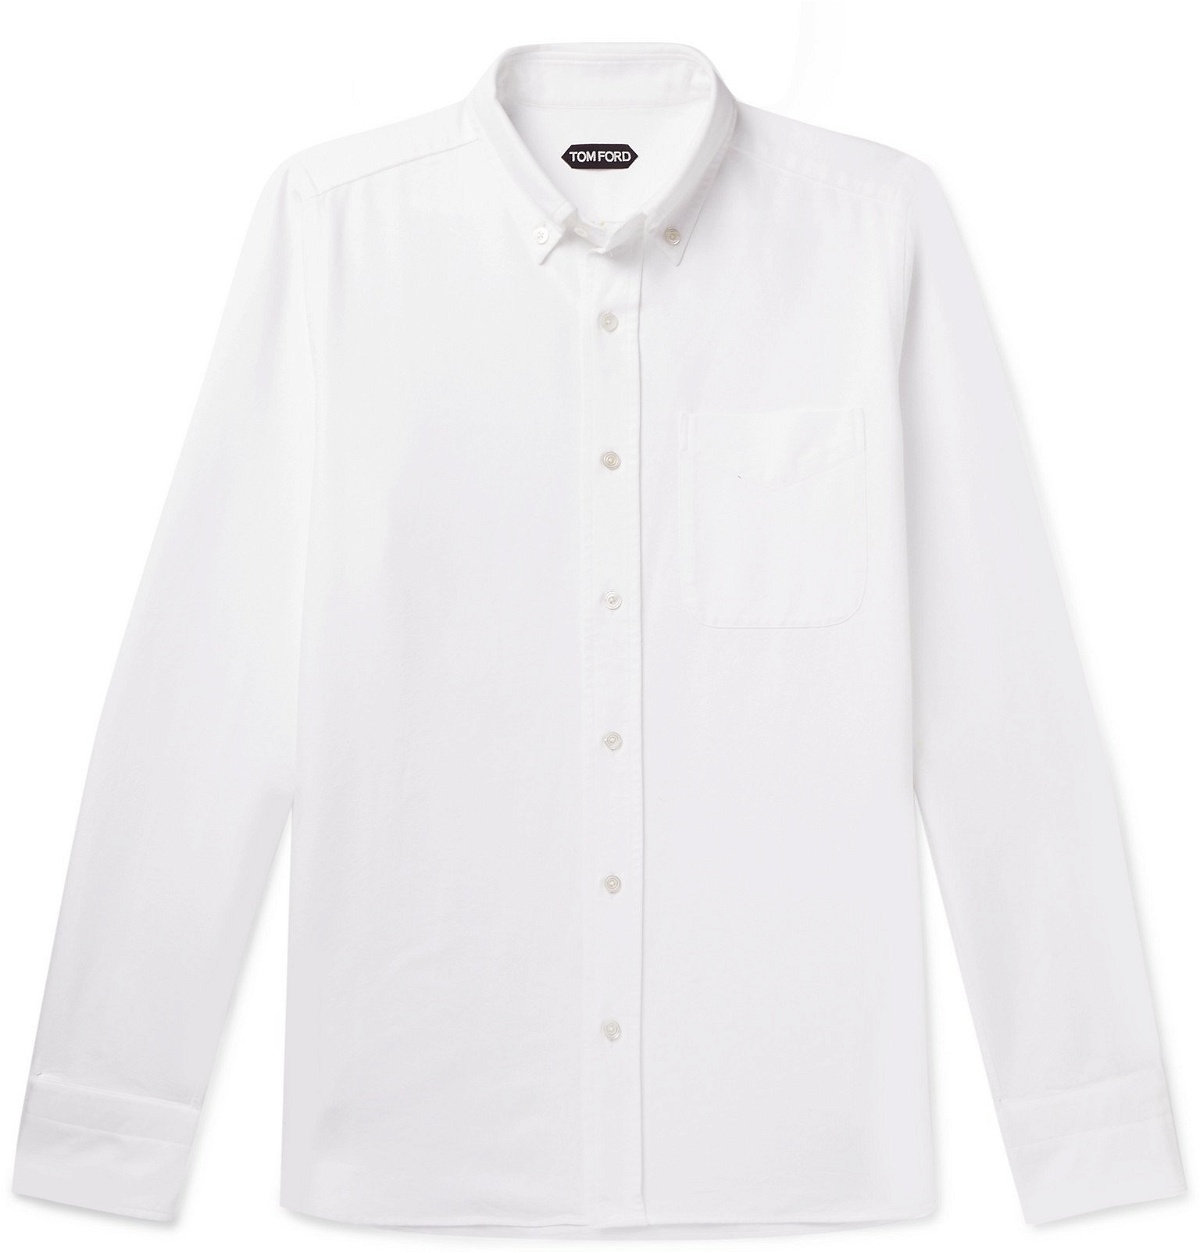 TOM FORD - White Slim-Fit Cotton Oxford Shirt - White TOM FORD